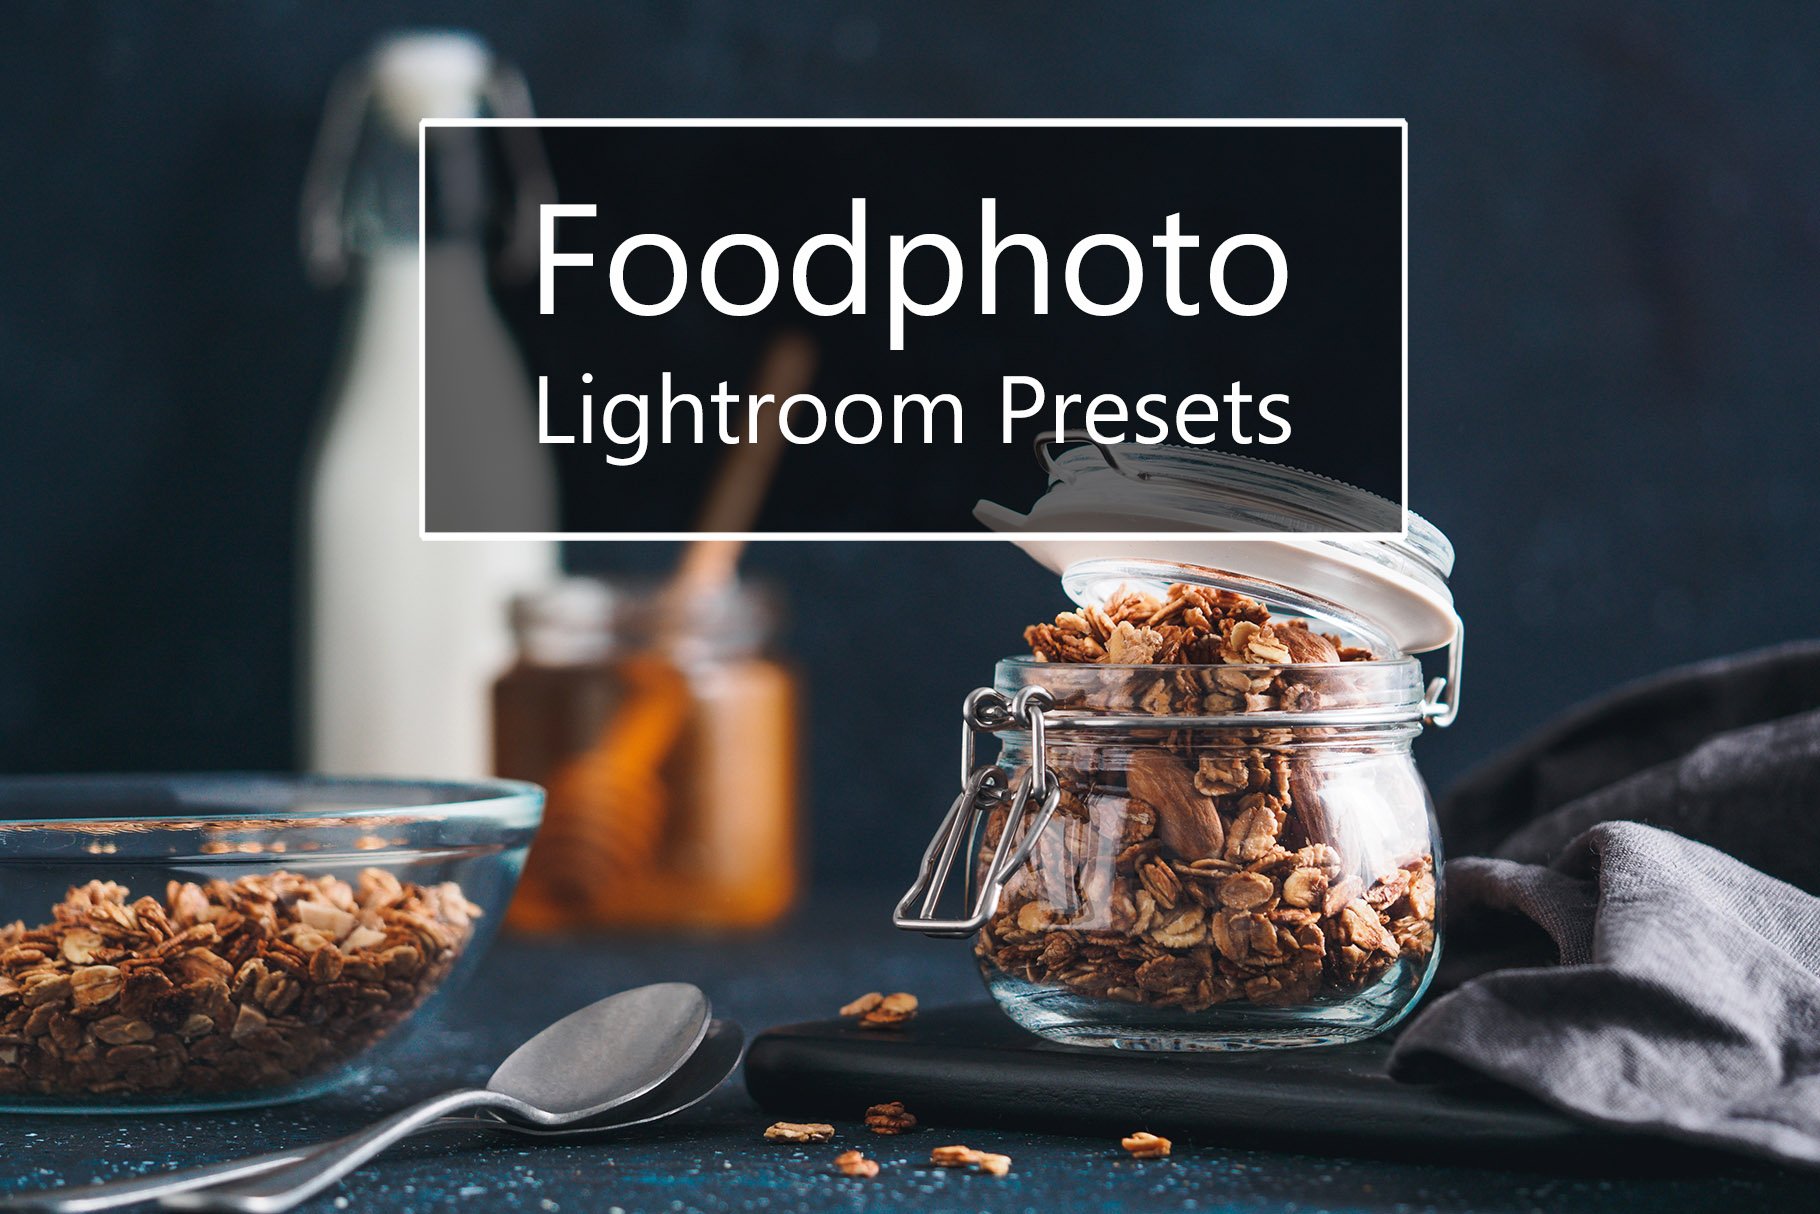 Foodphoto Lightroom presetscover image.